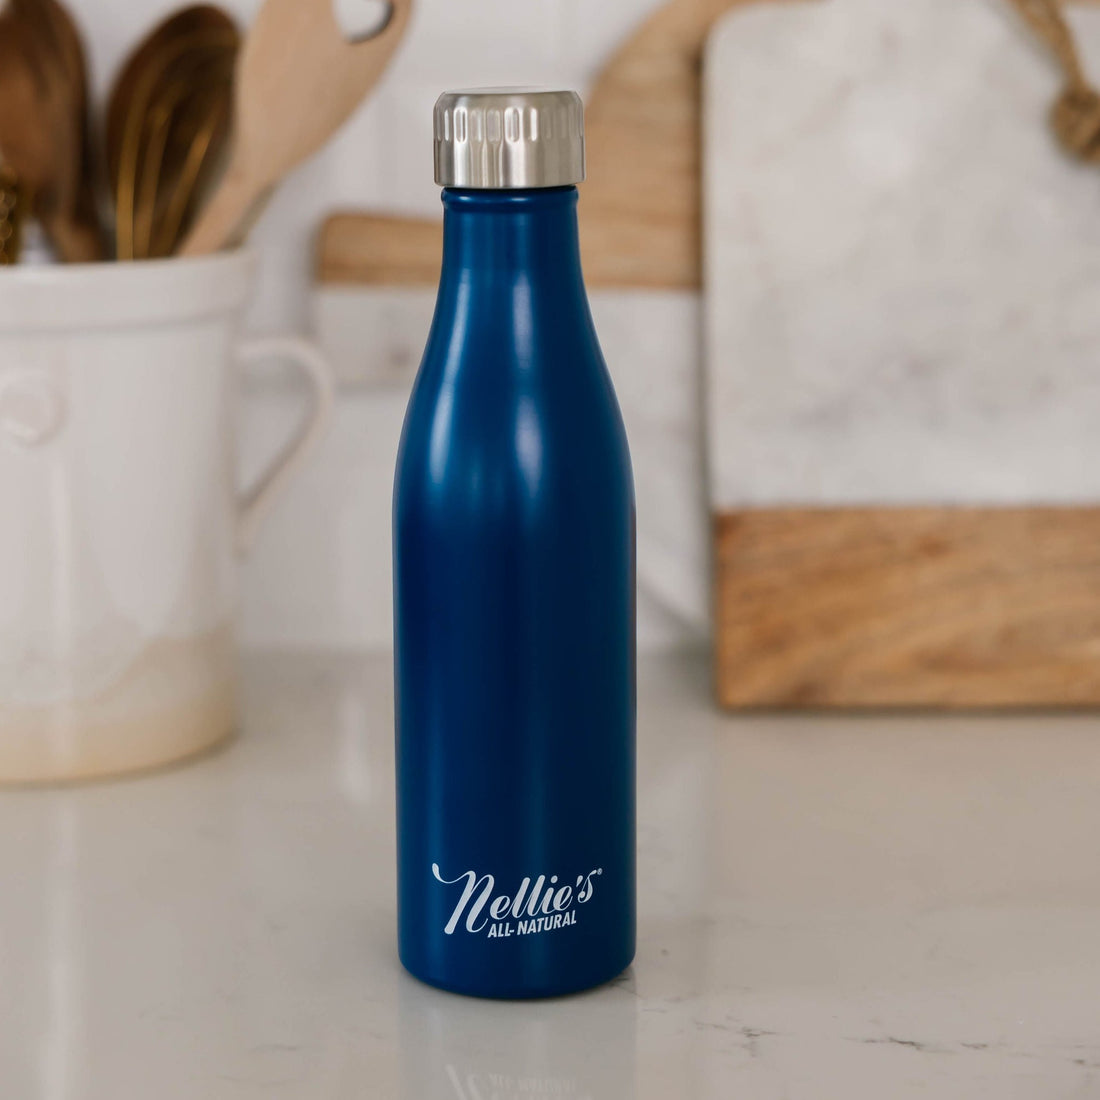 16oz Blue Nellie's branded stainless steel water bottle safe for hot or cold beverages